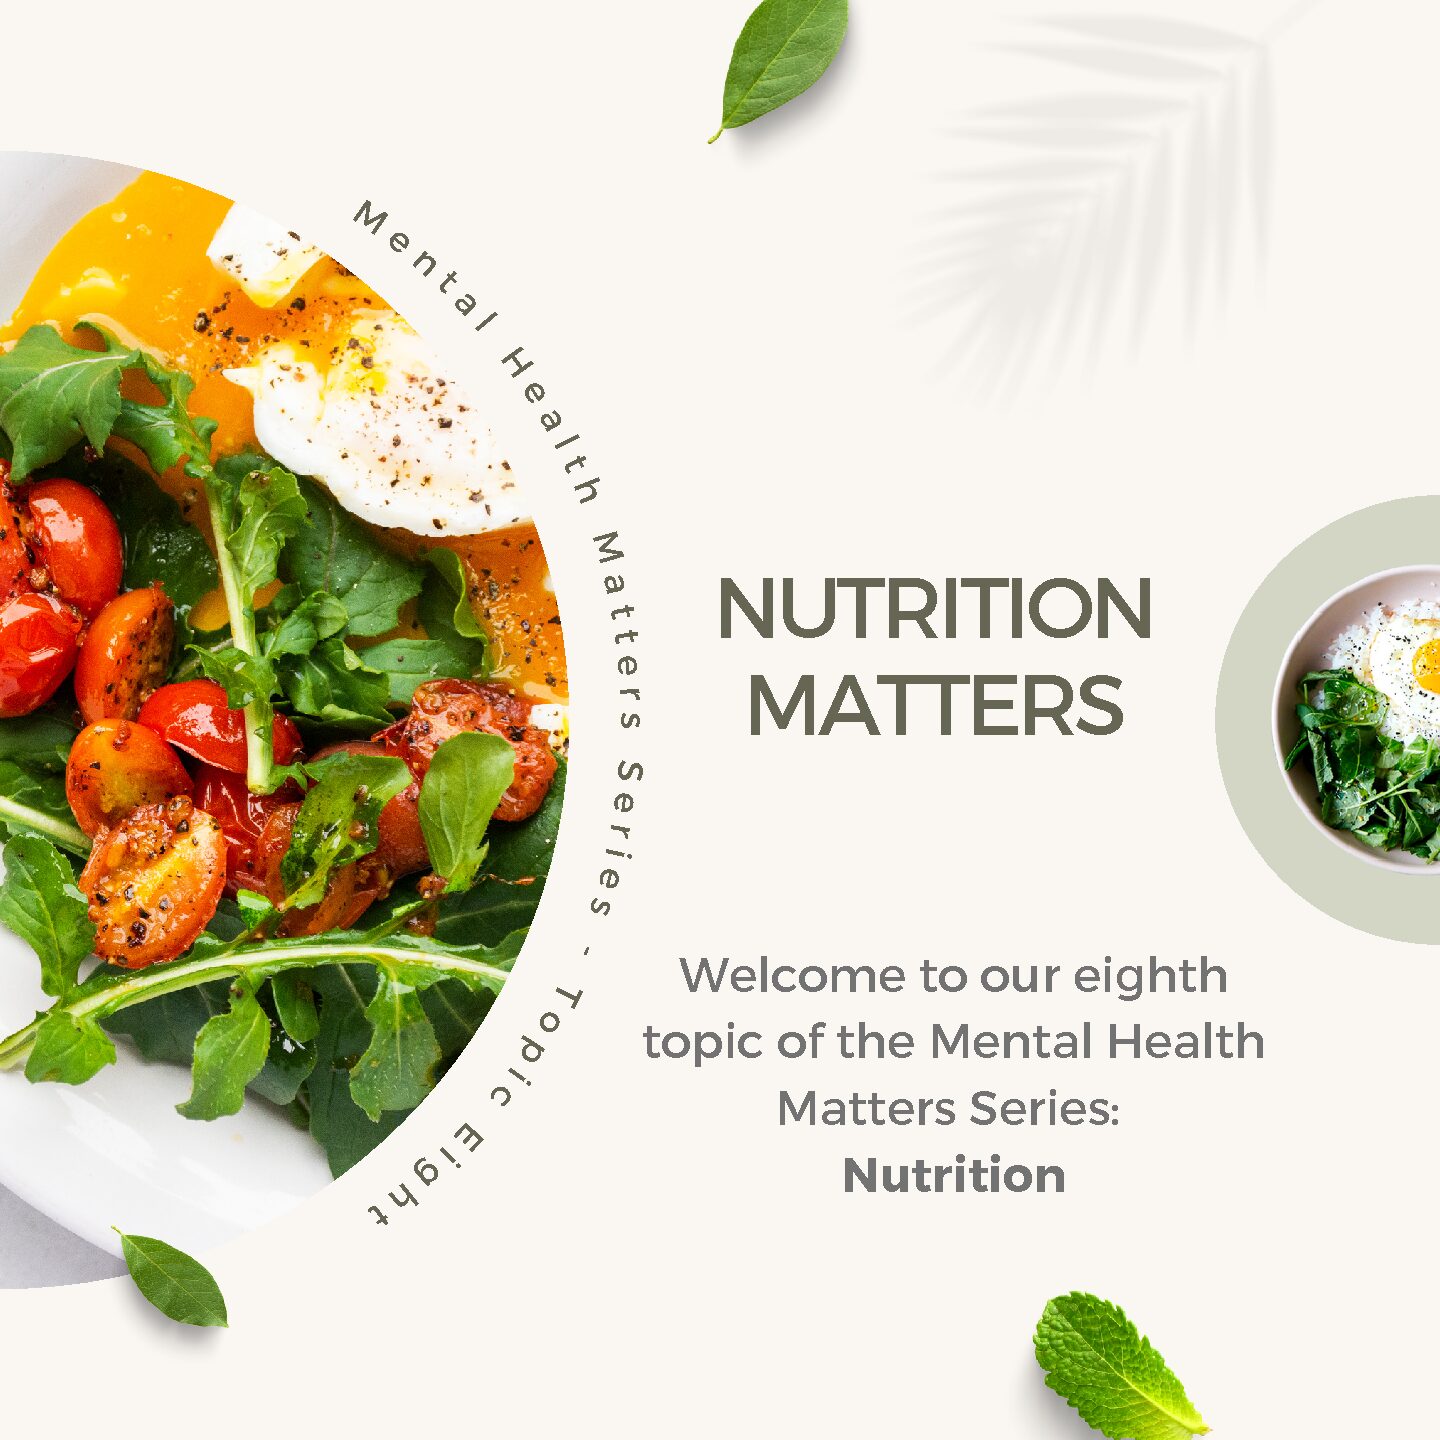 Mental Health Matters Series: Nutrition Matters